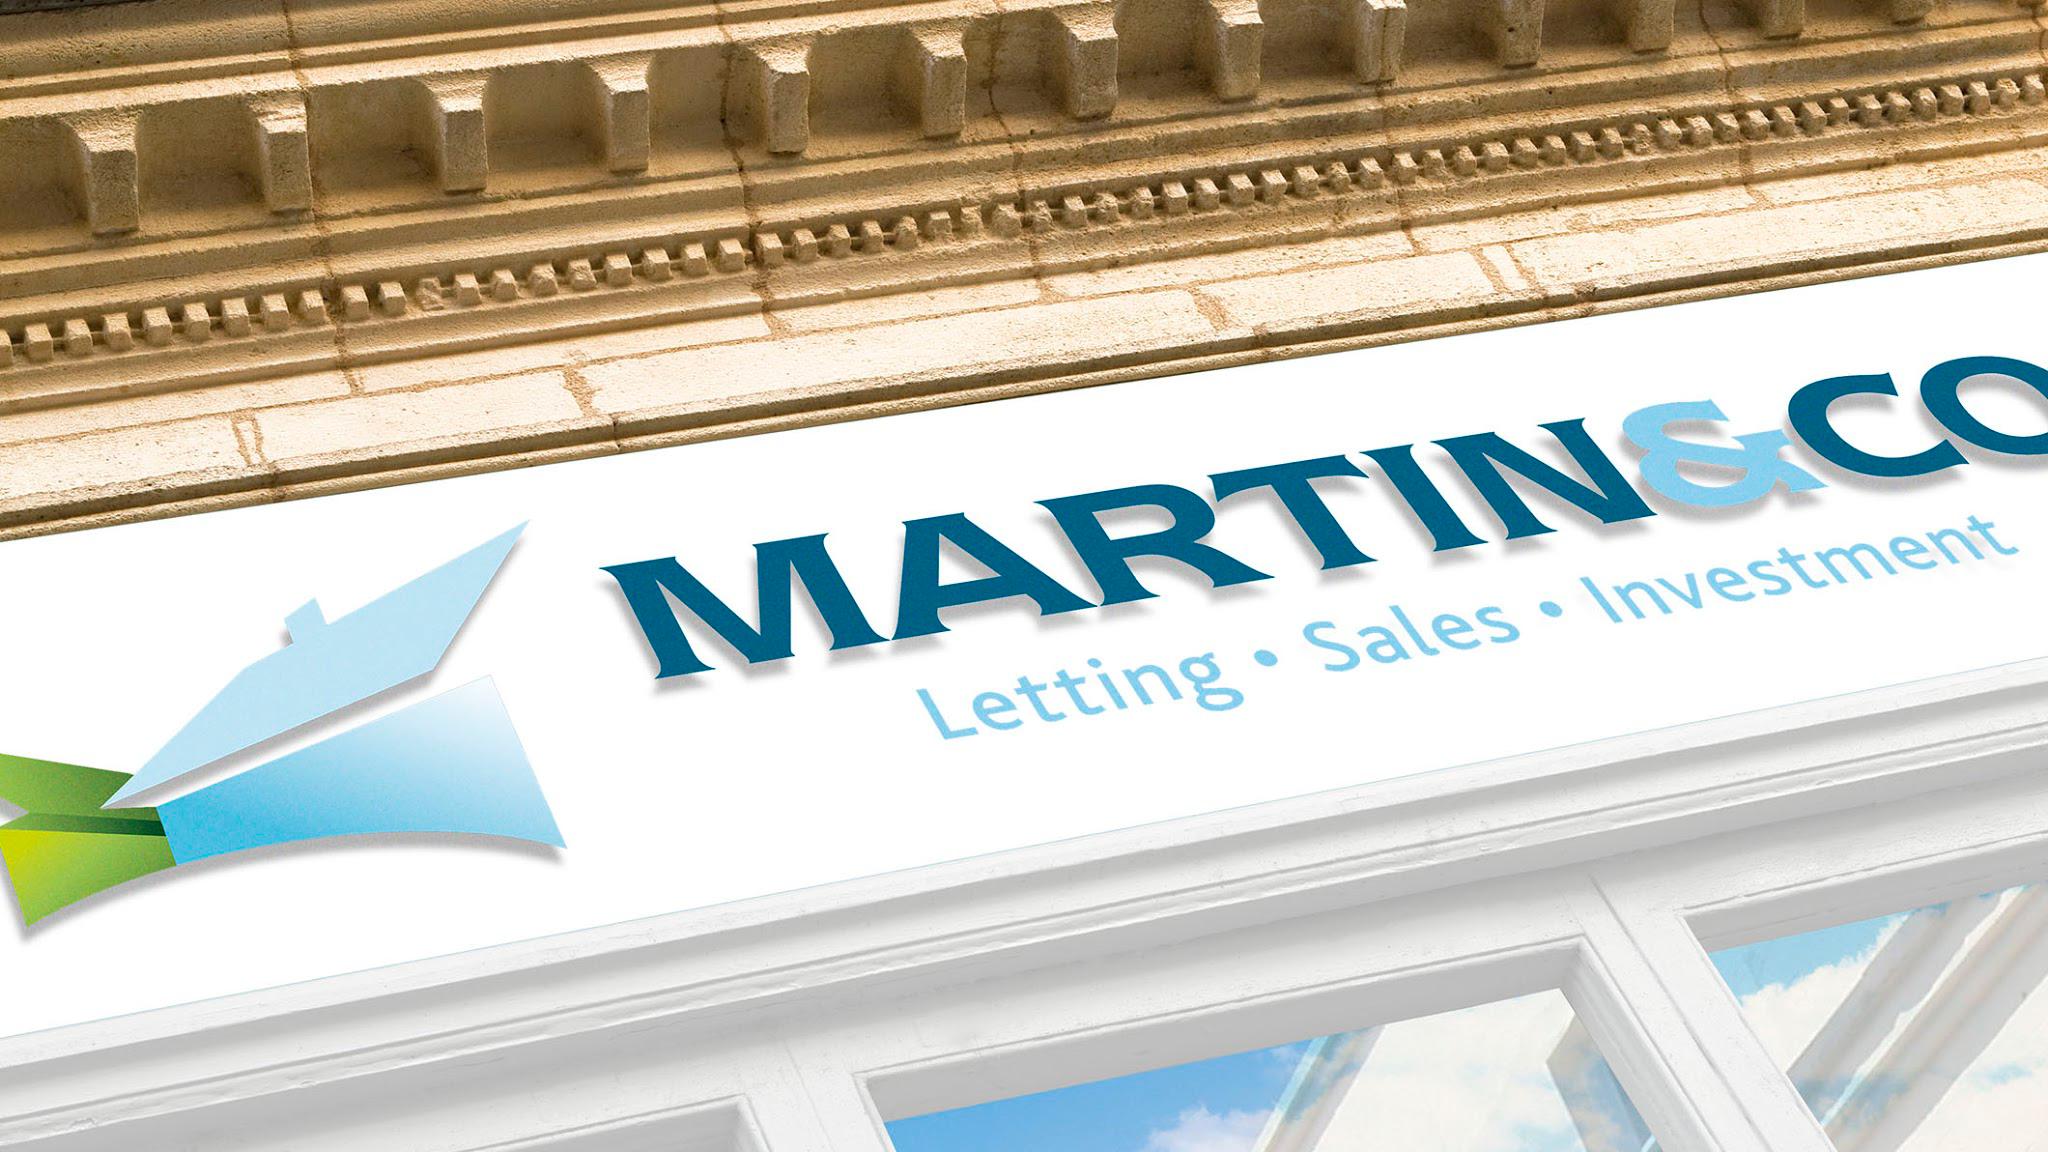 Martin & Co Harrogate Lettings & Estate Agents Harrogate 01423 565556